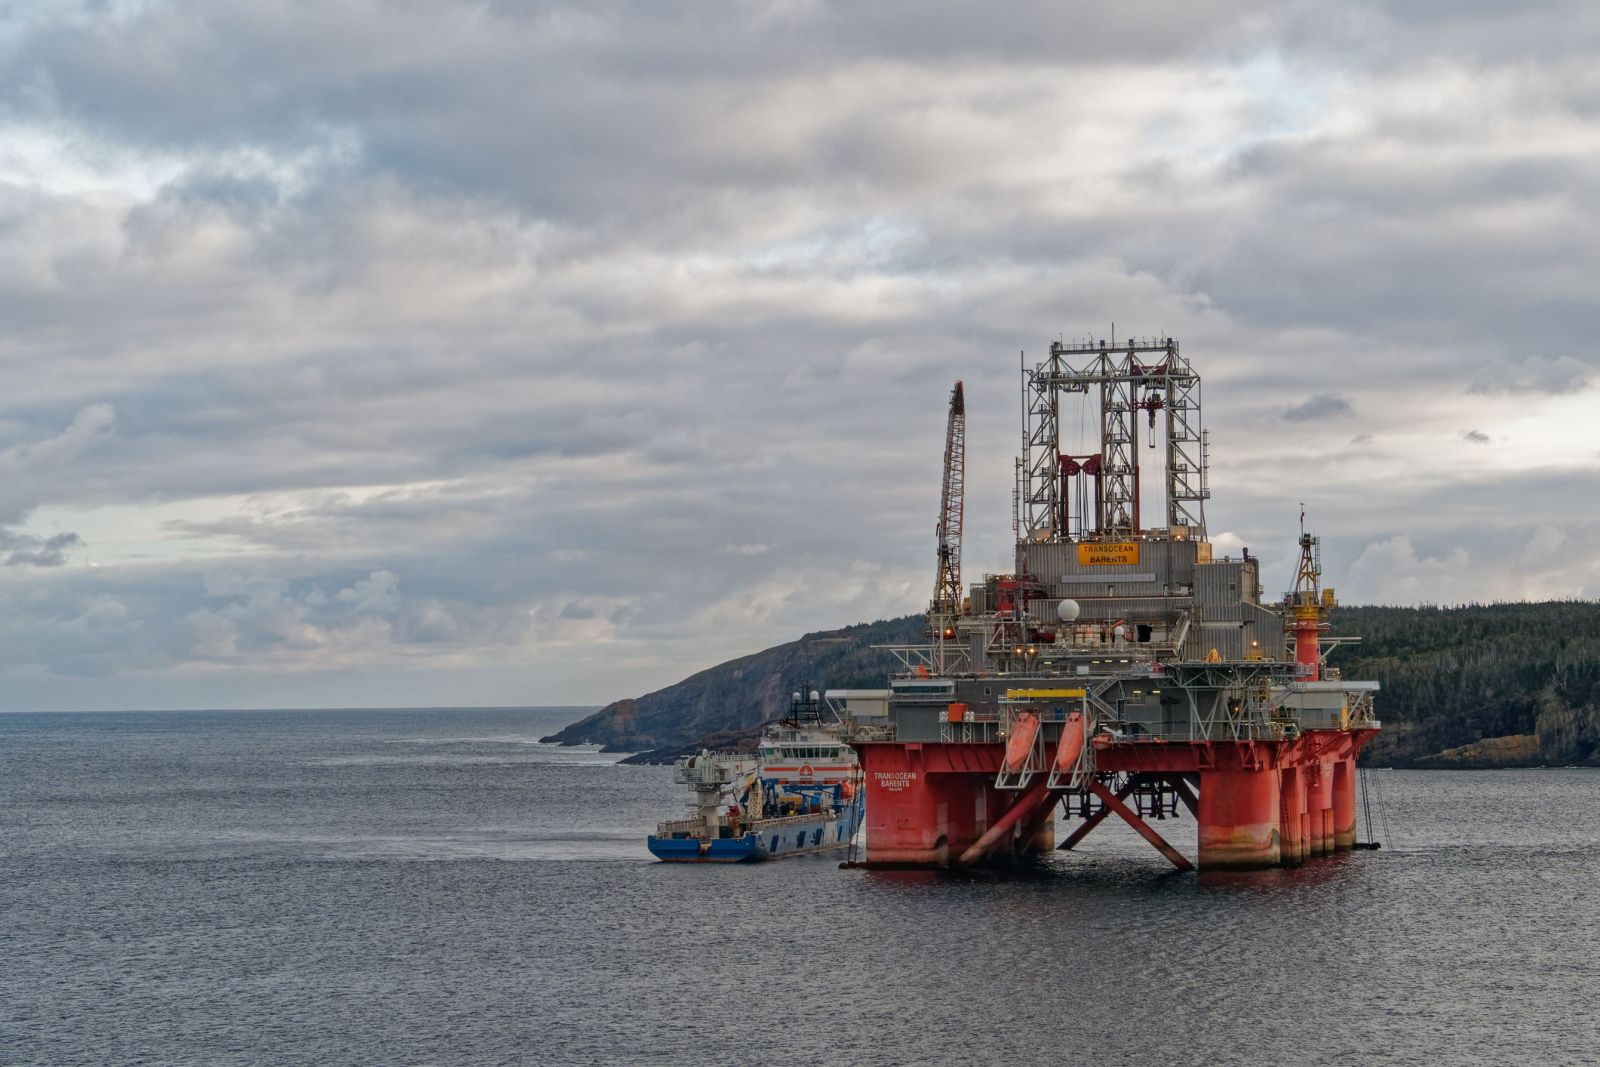 Oil - Offshore oil platform in ocean by Wirestock via iStock